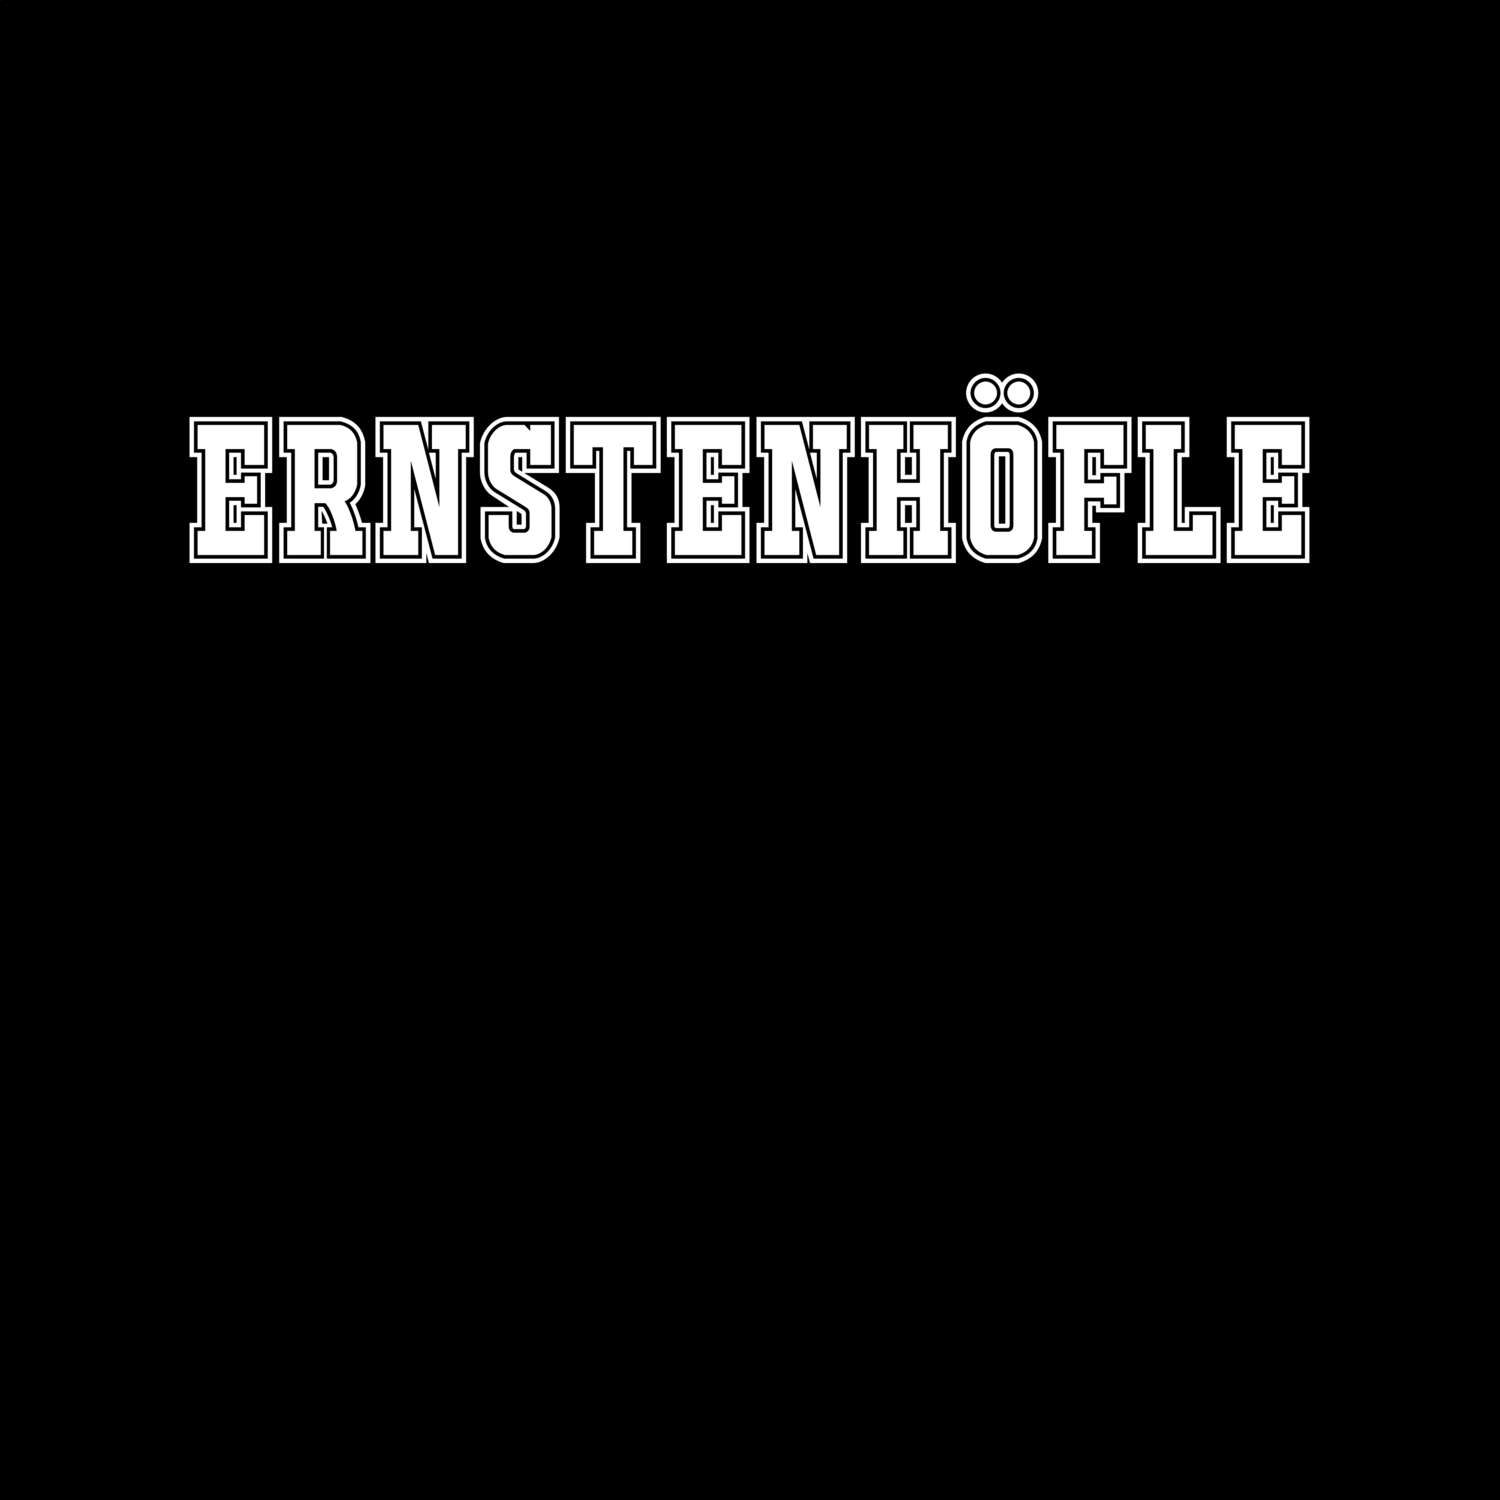 Ernstenhöfle T-Shirt »Classic«